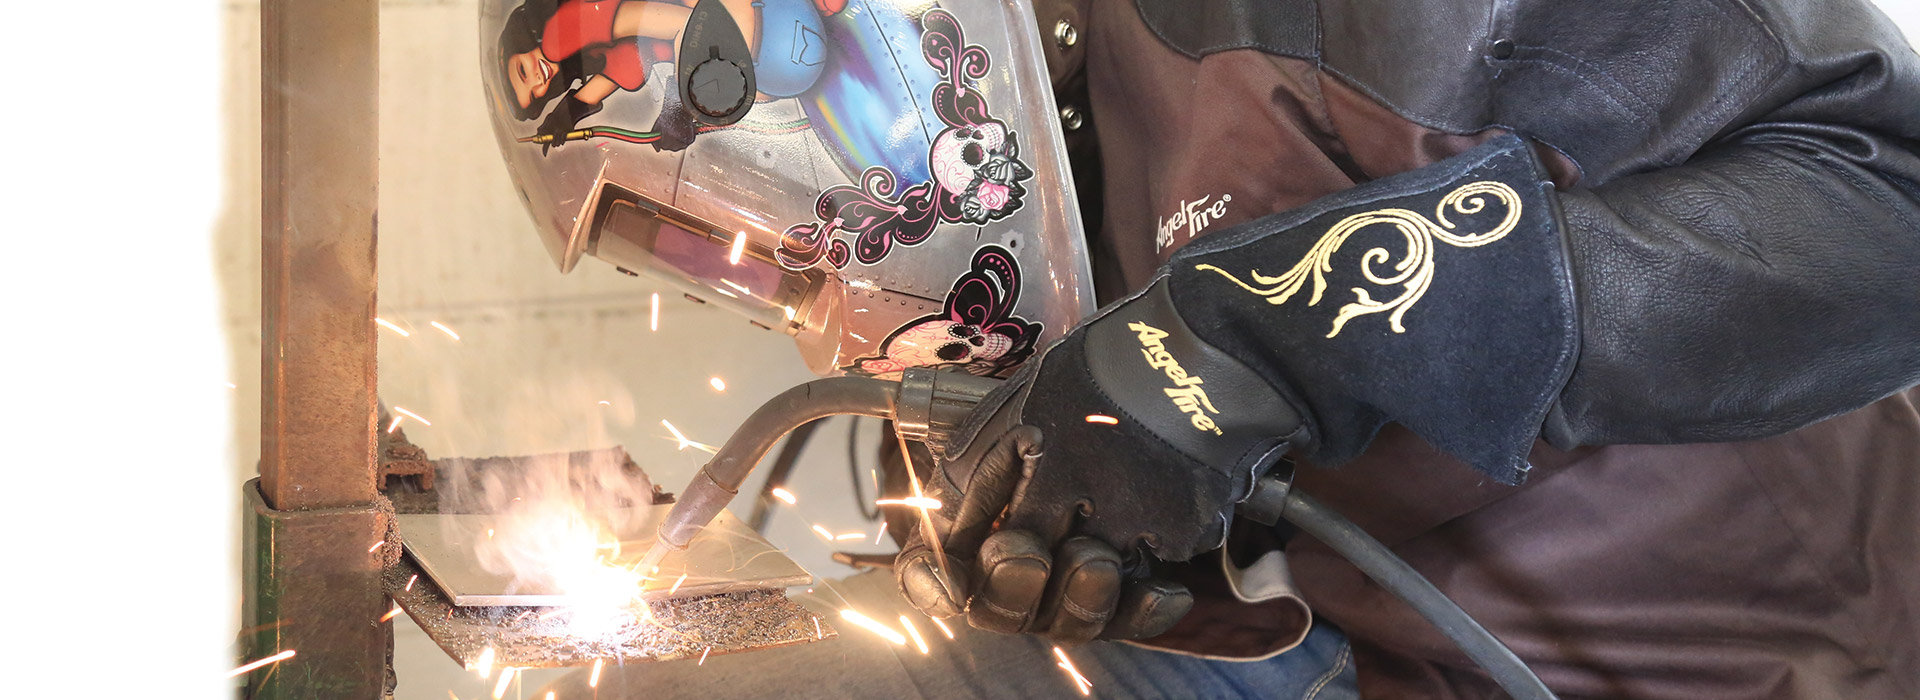 An automotive student practices welding